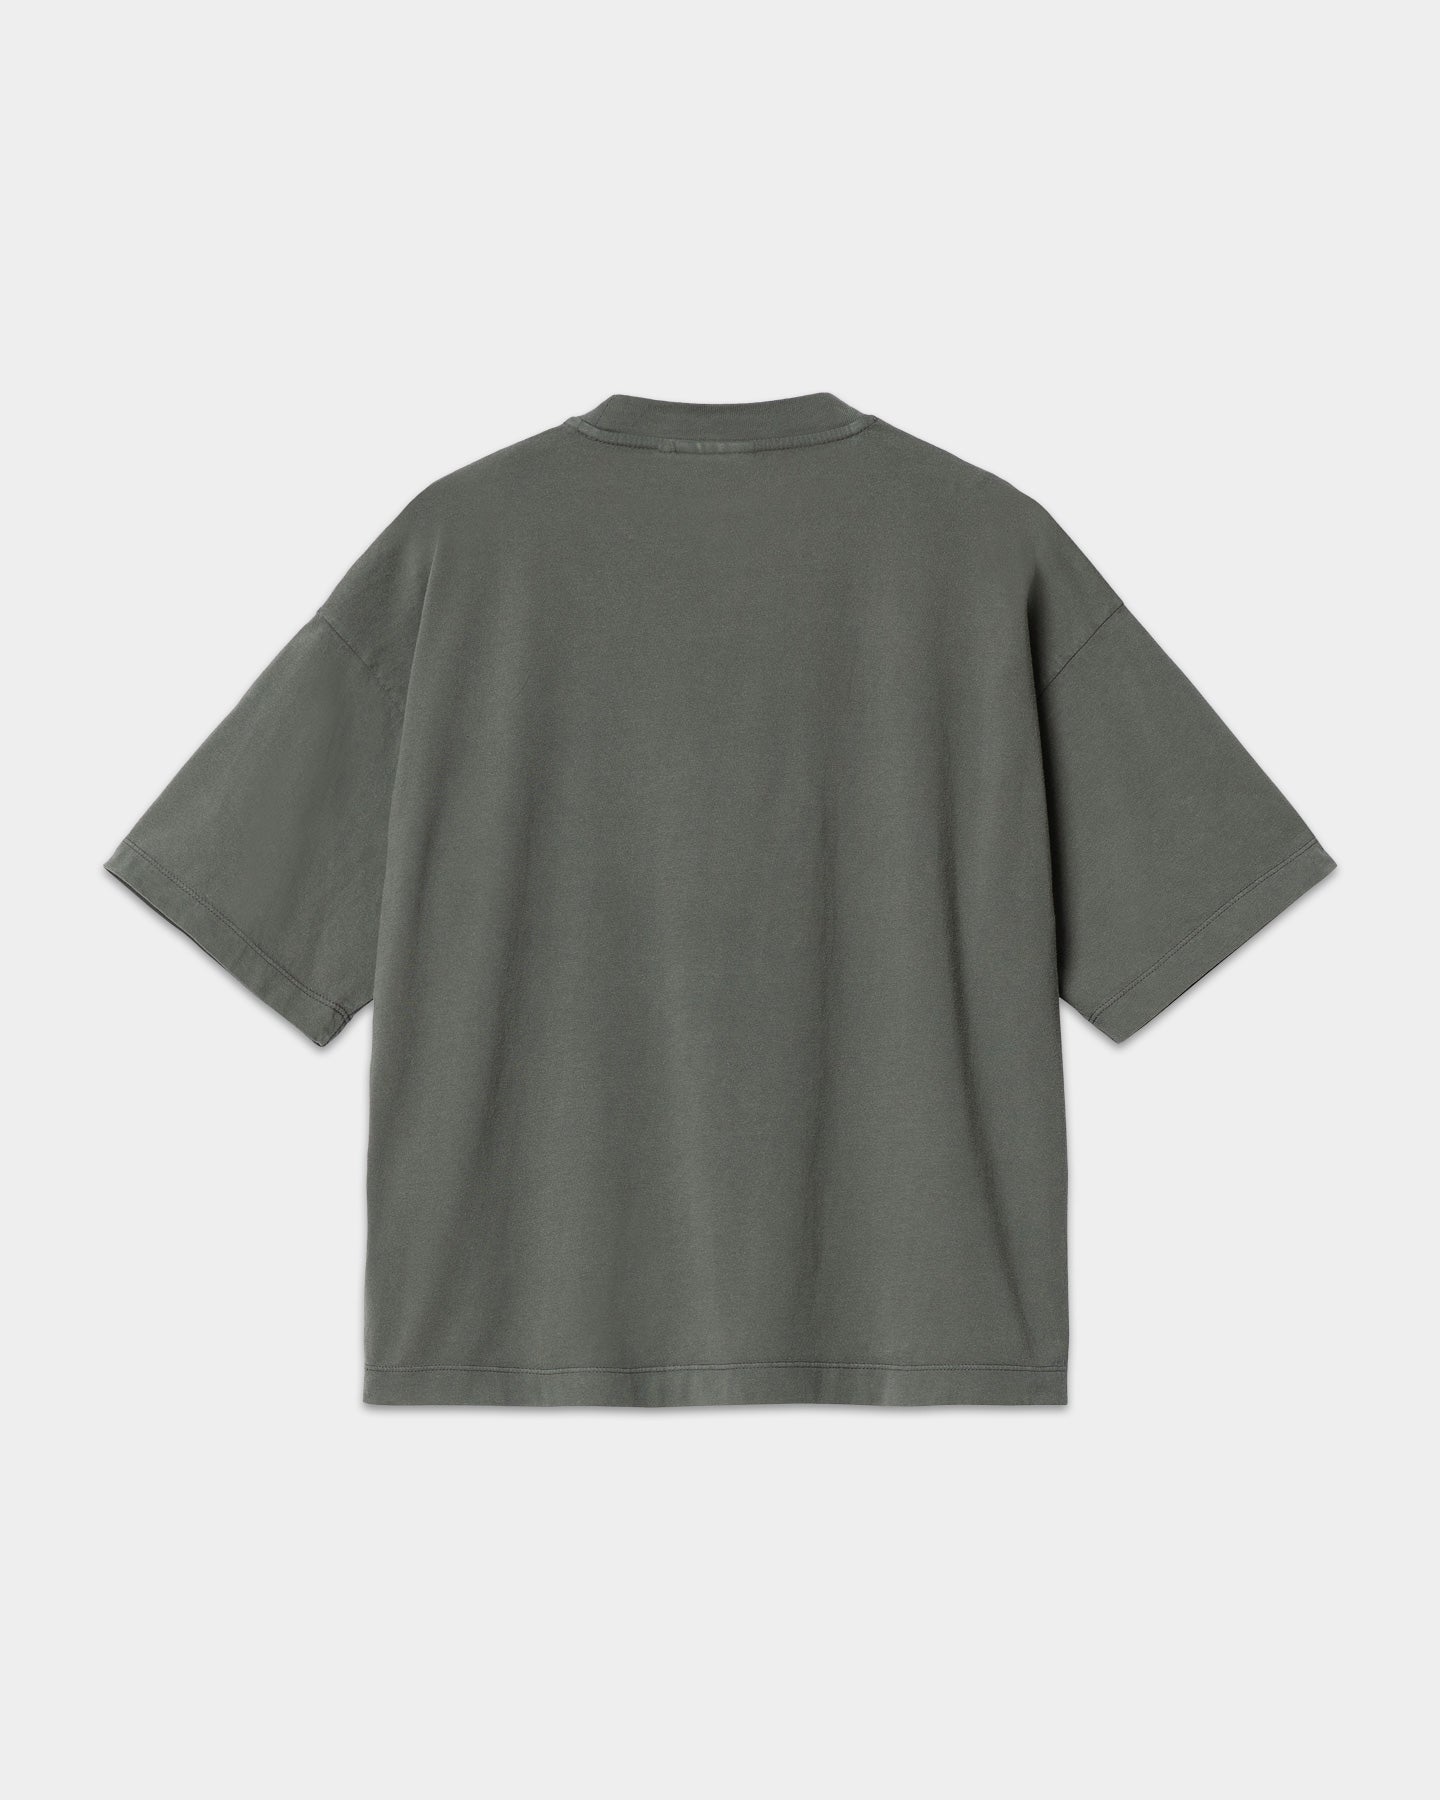 W' NELSON T-SHIRT - smoke green (garment dyed)